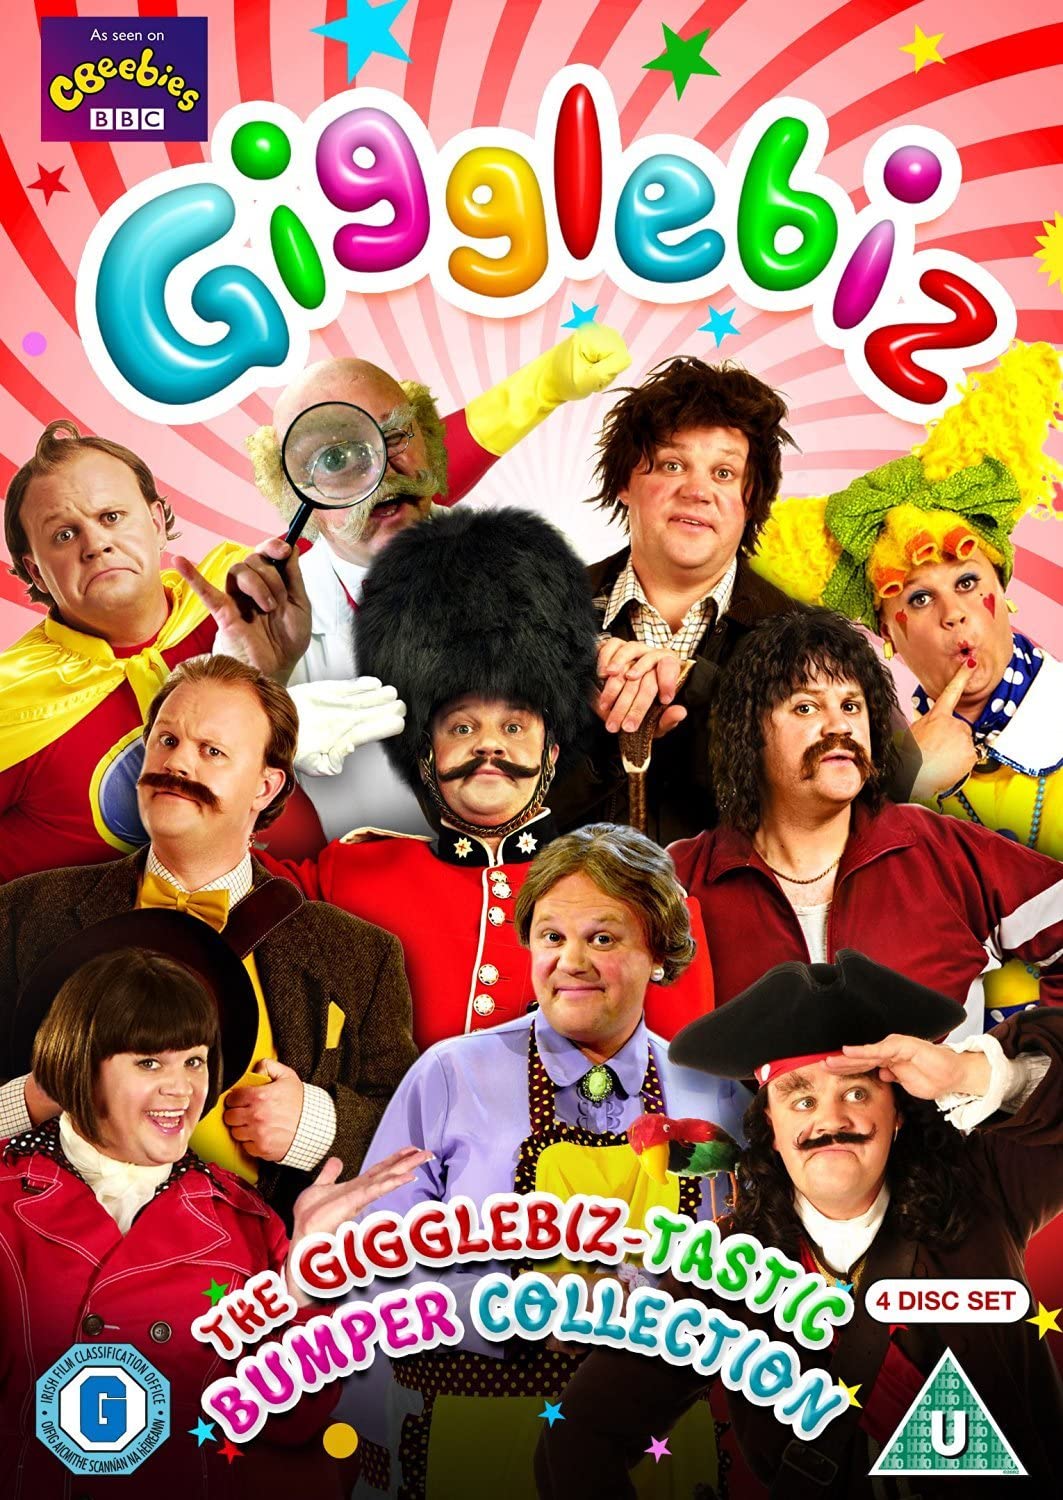 Gigglebiz: The Bumper Collection Vol2 Set) - Comedy [DVD]